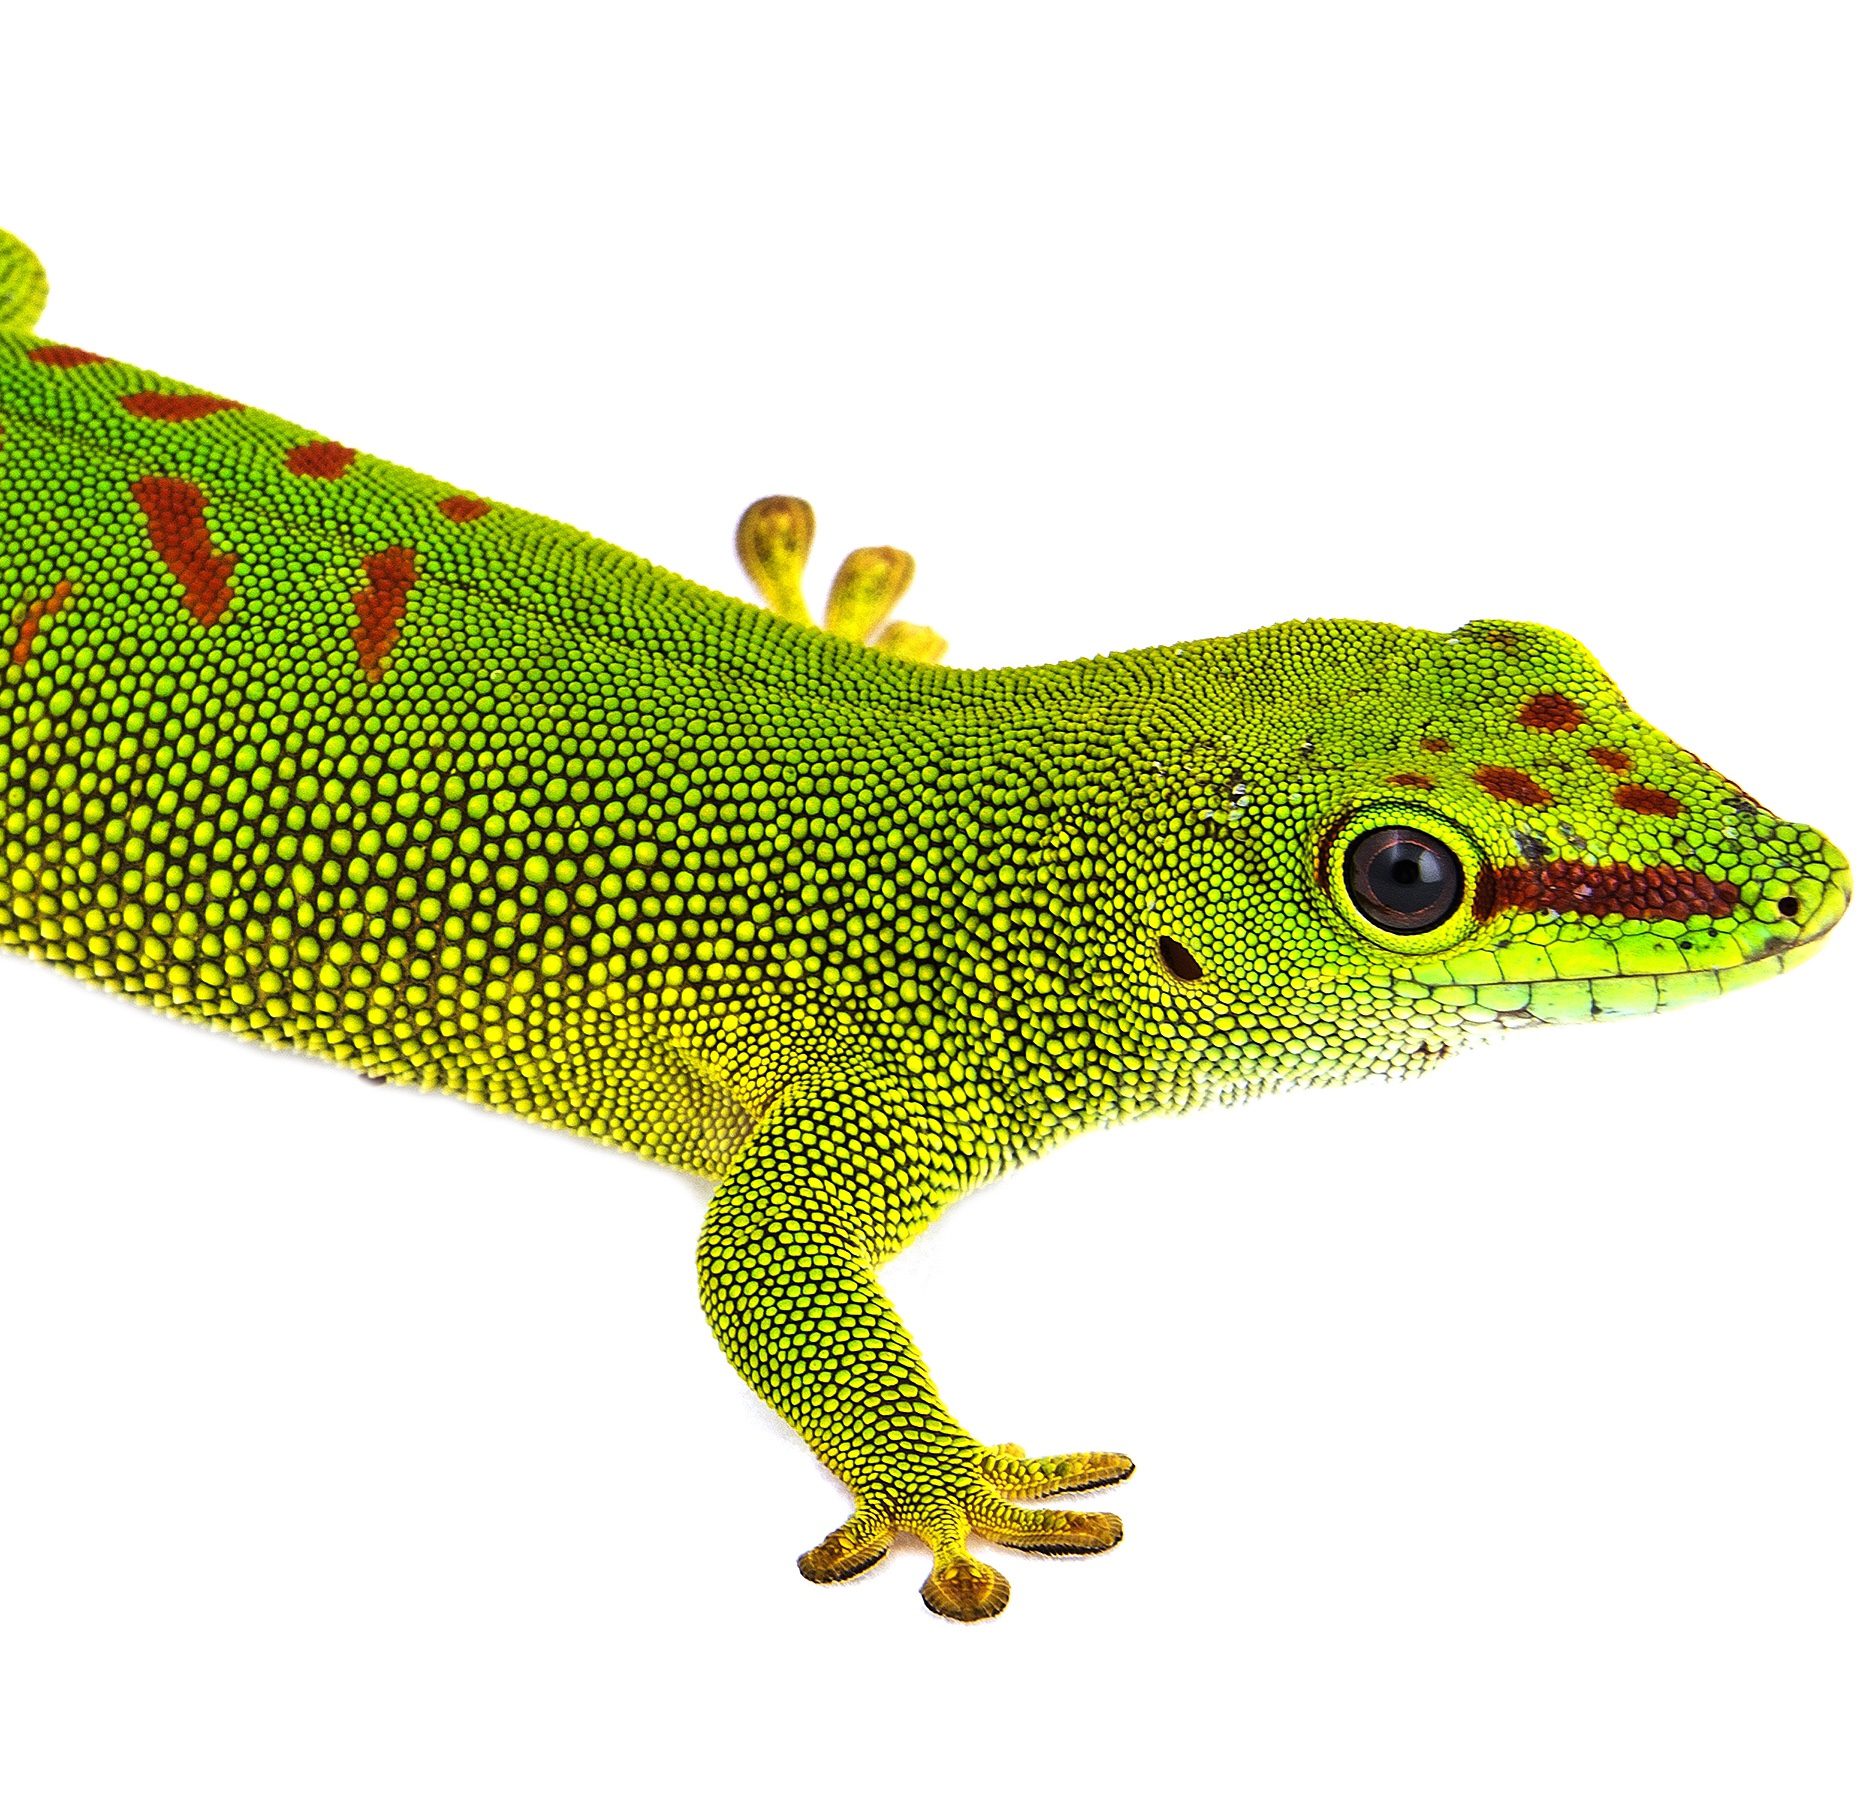 CB Giant Madagascan Day Gecko